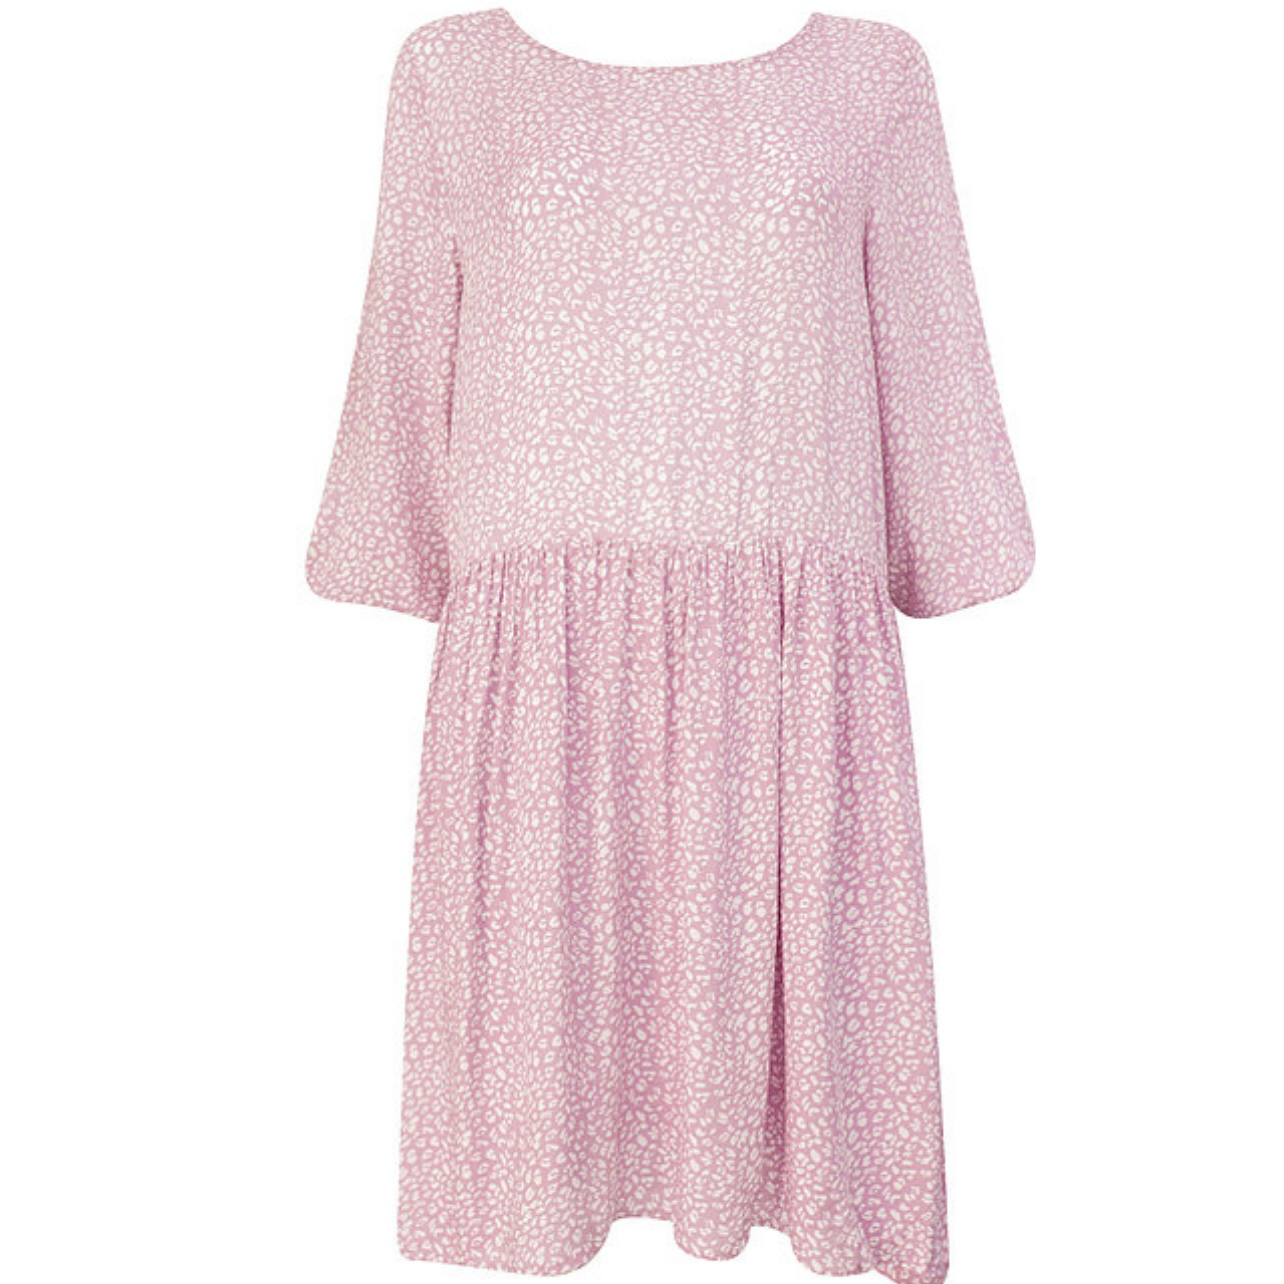 ‘ABBEY’ Dress - Pink